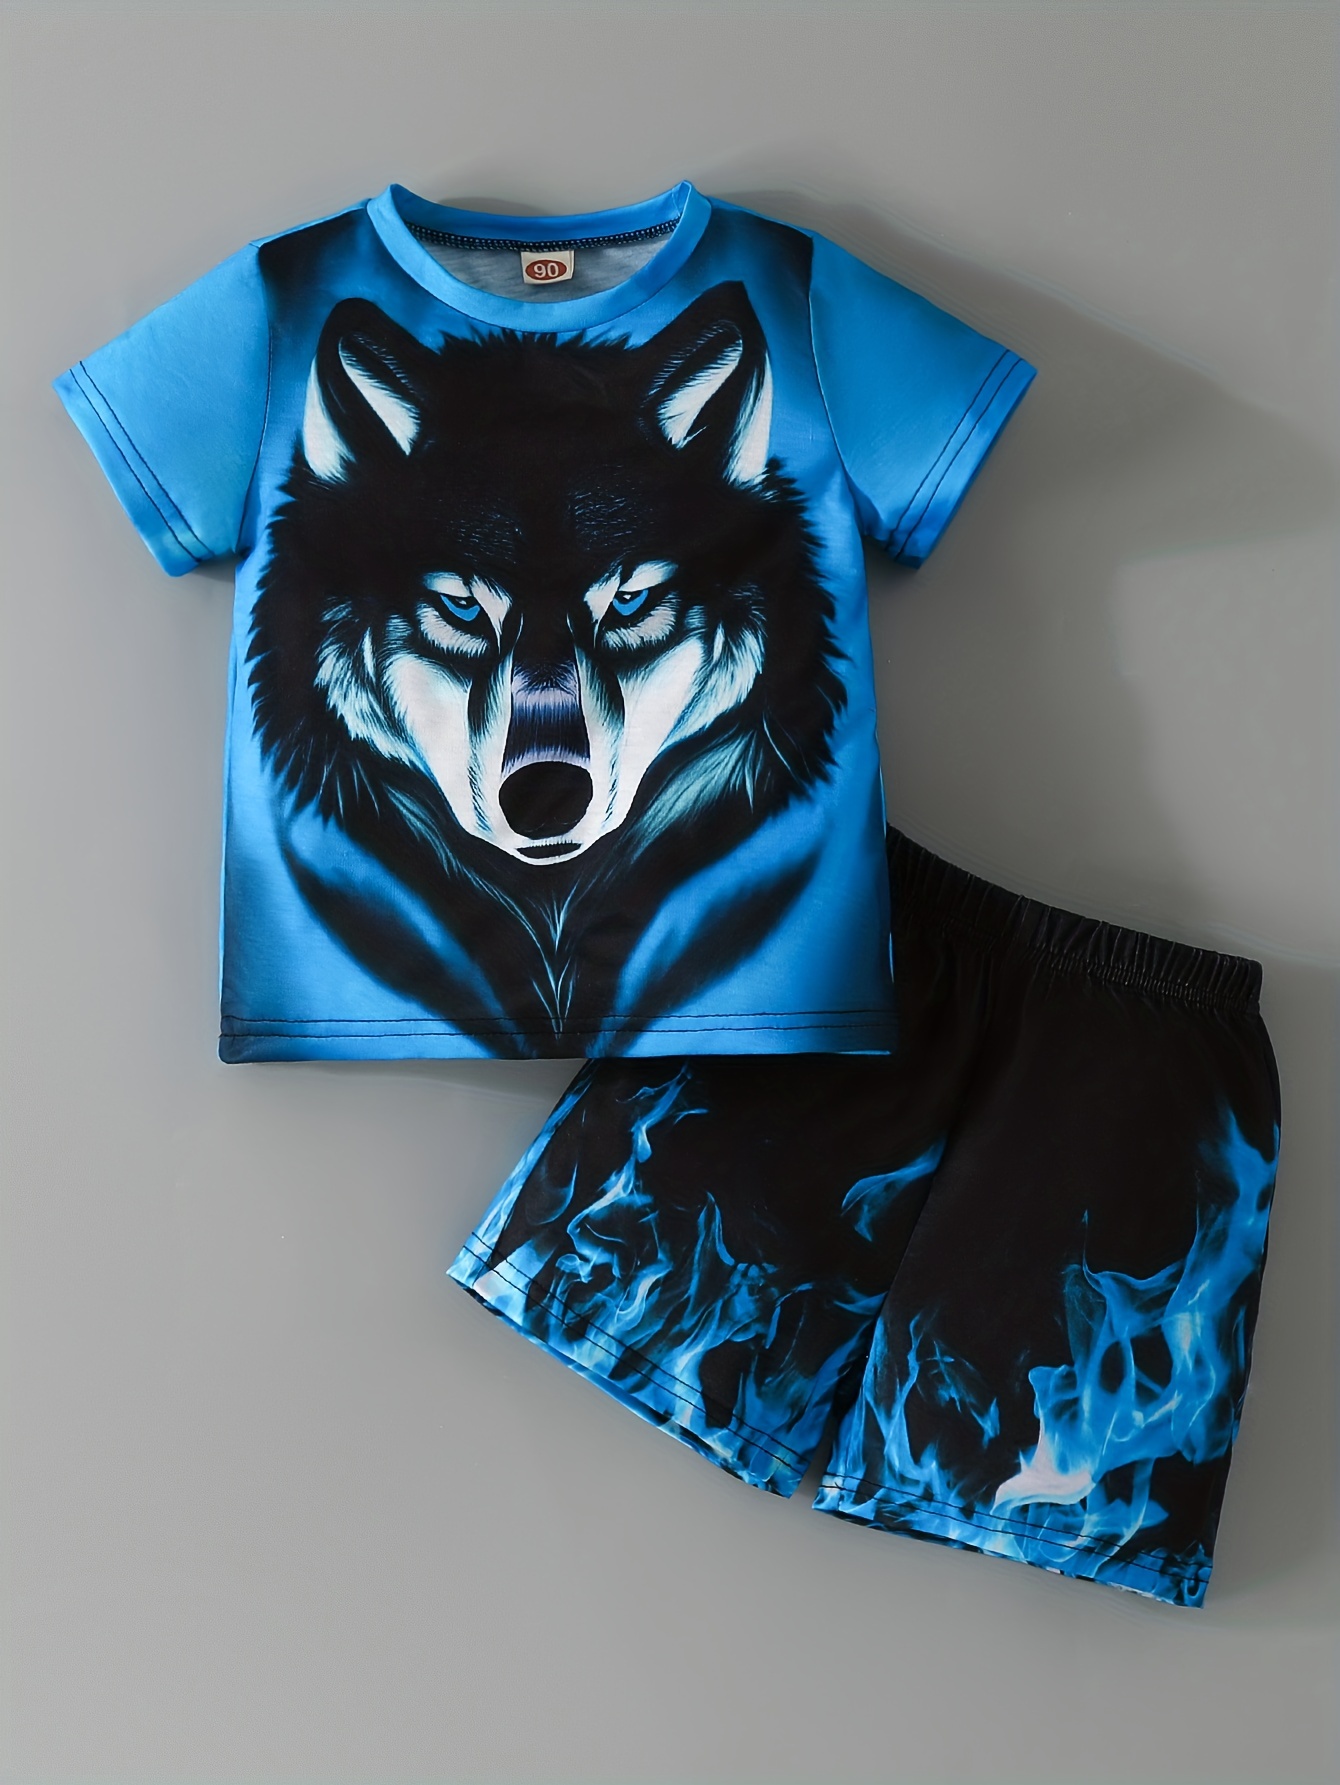 Roblox Kids Boys Summer T-shirt 3d Printed Short Sleeve Comfy Tee Tops